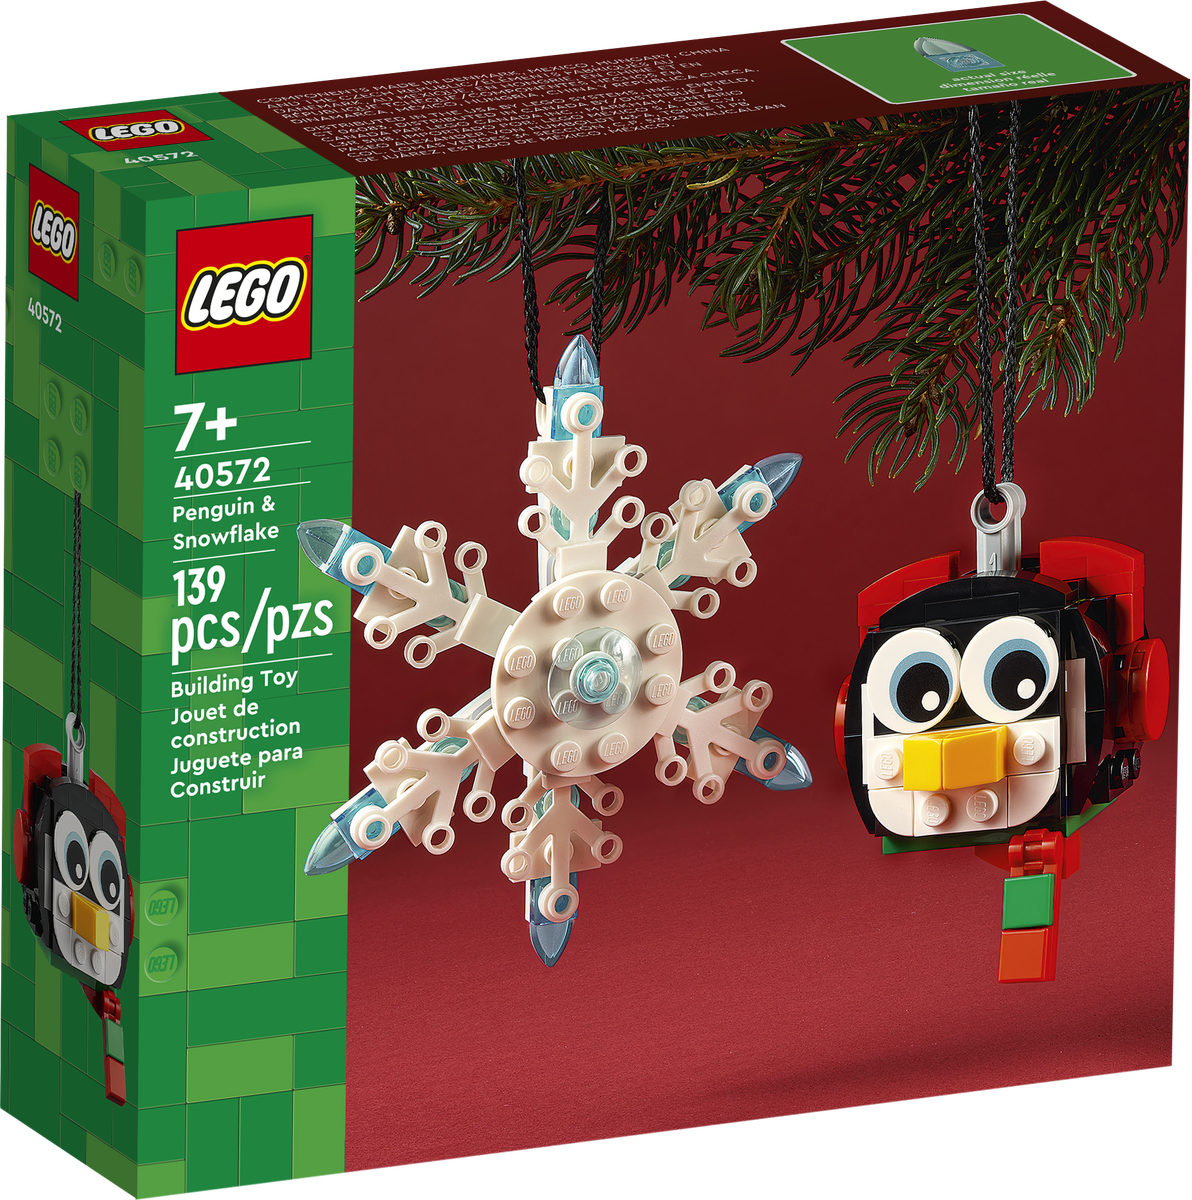 40572: Penguin & Snowflake